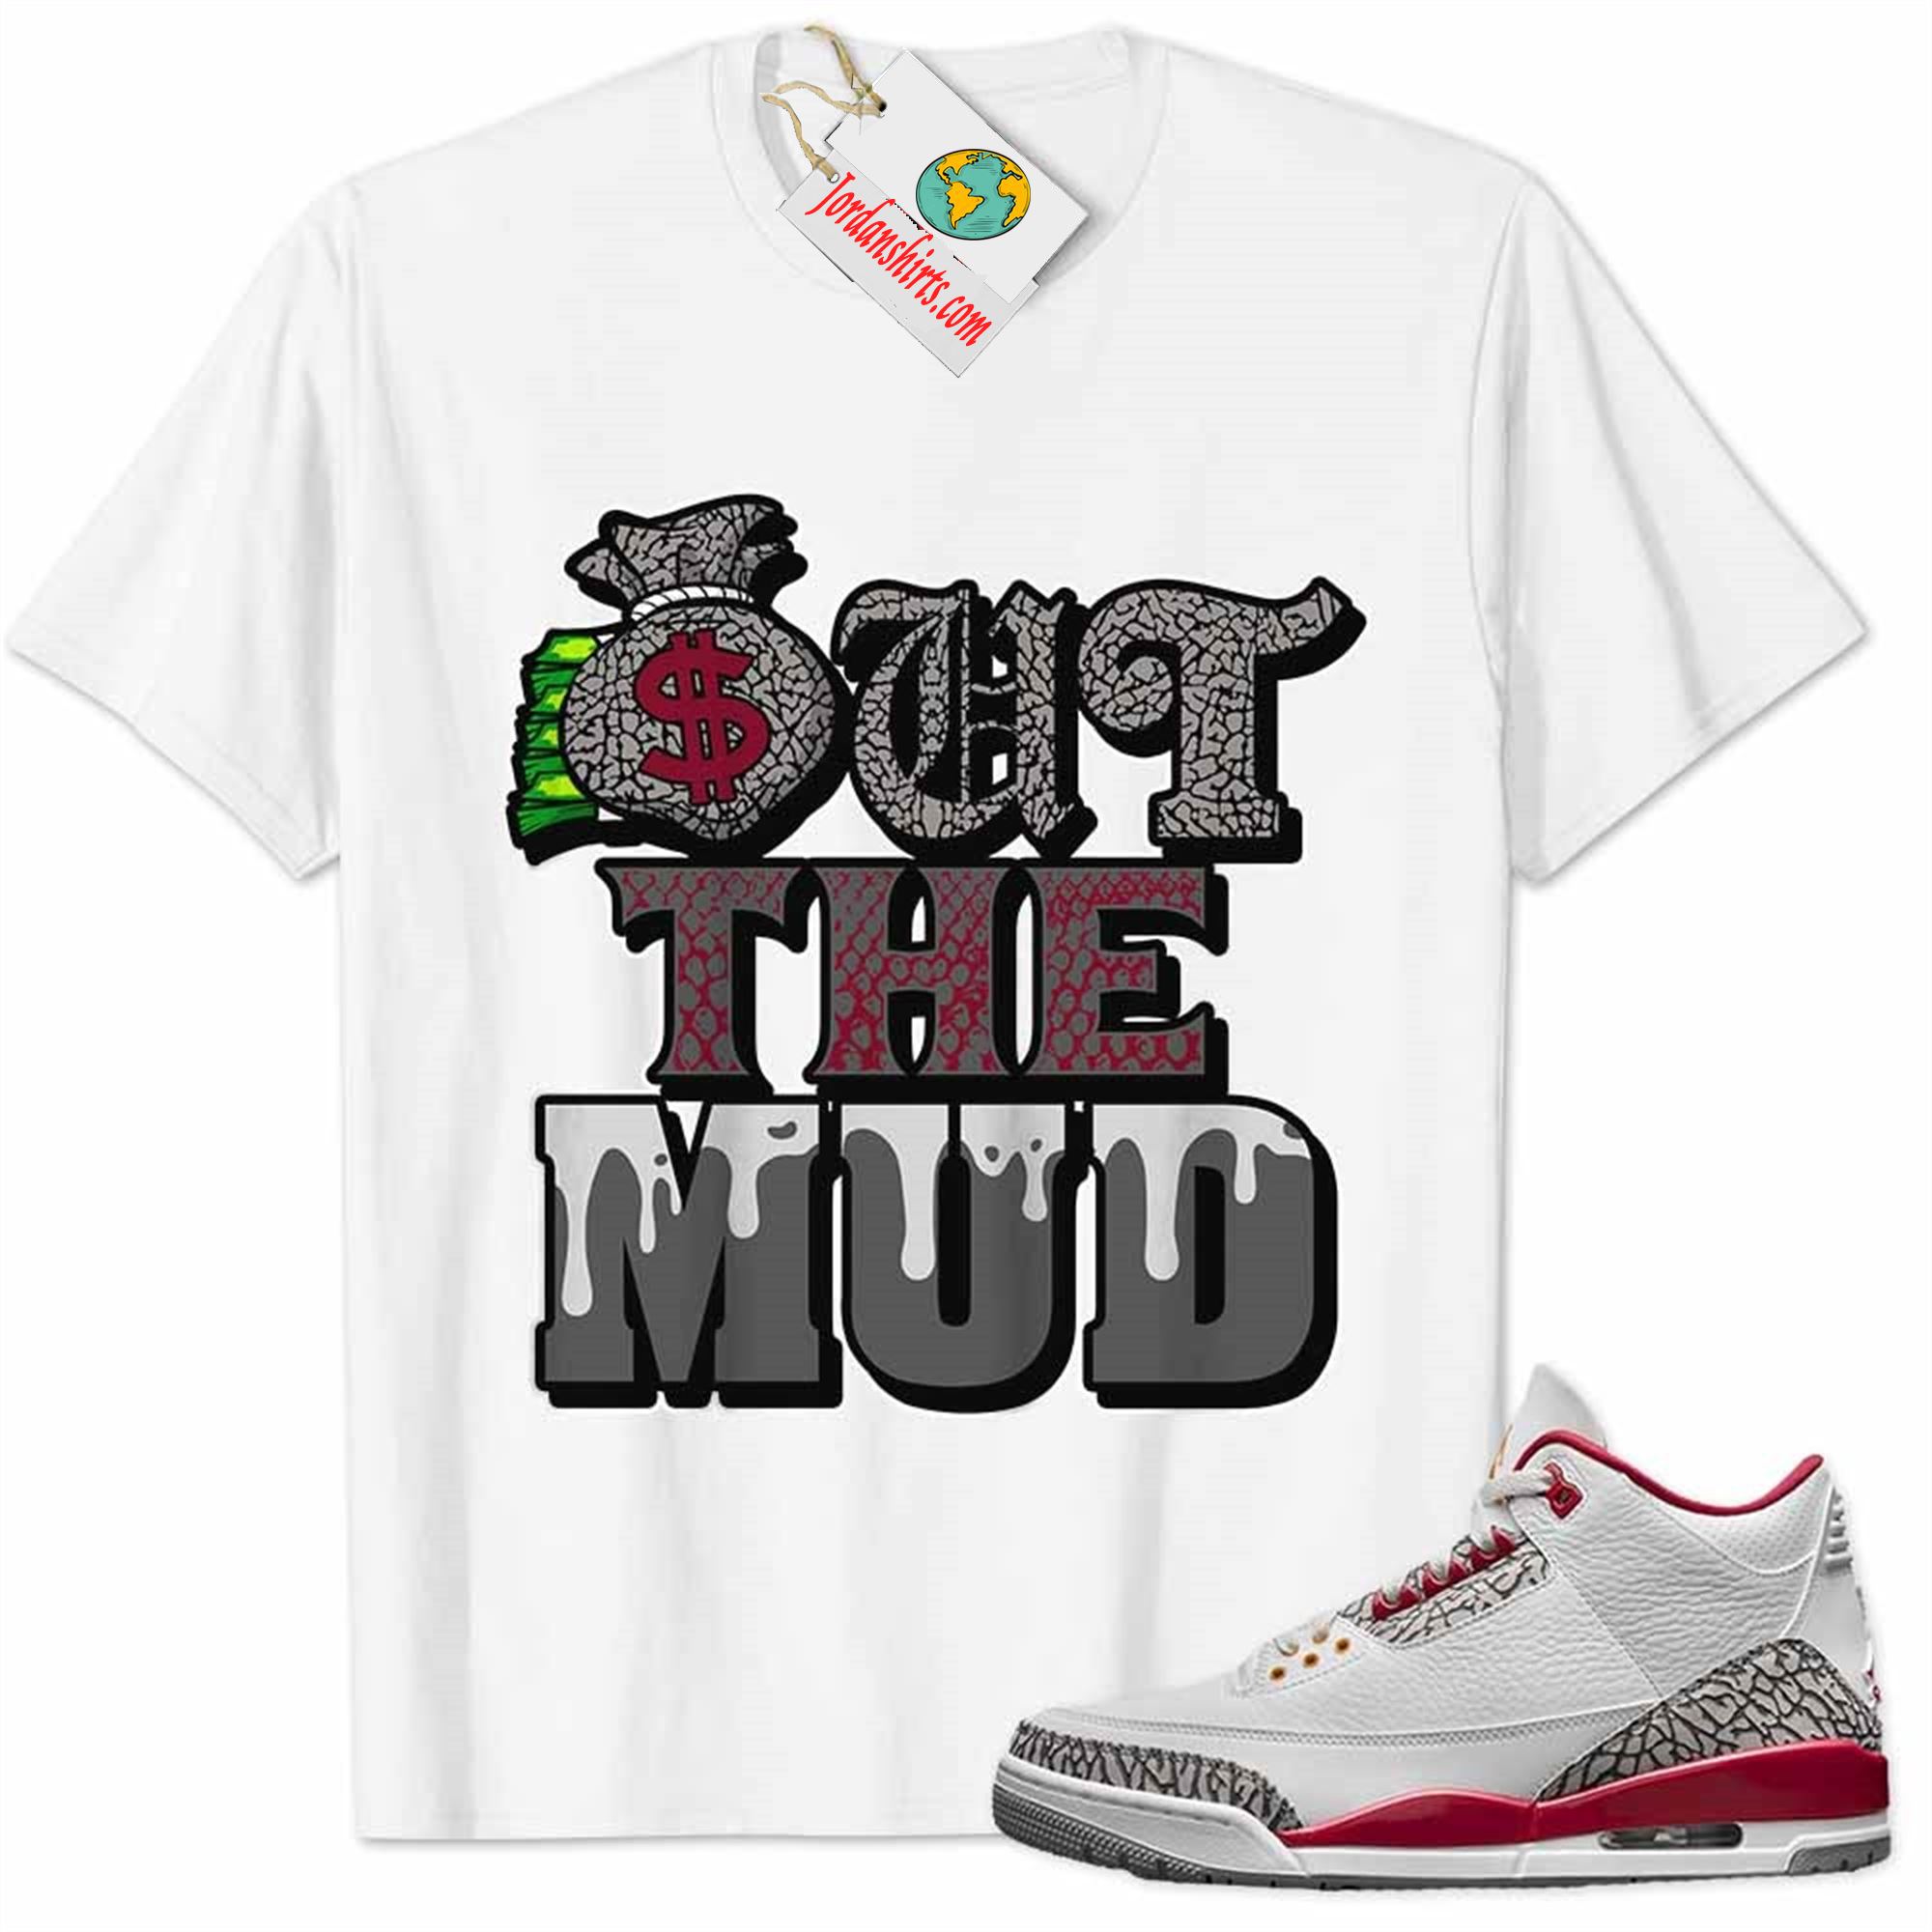 Jordan 3 Shirt, Jordan 3 Cardinal Red Shirt Out The Mud Money Bag White Full Size Up To 5xl